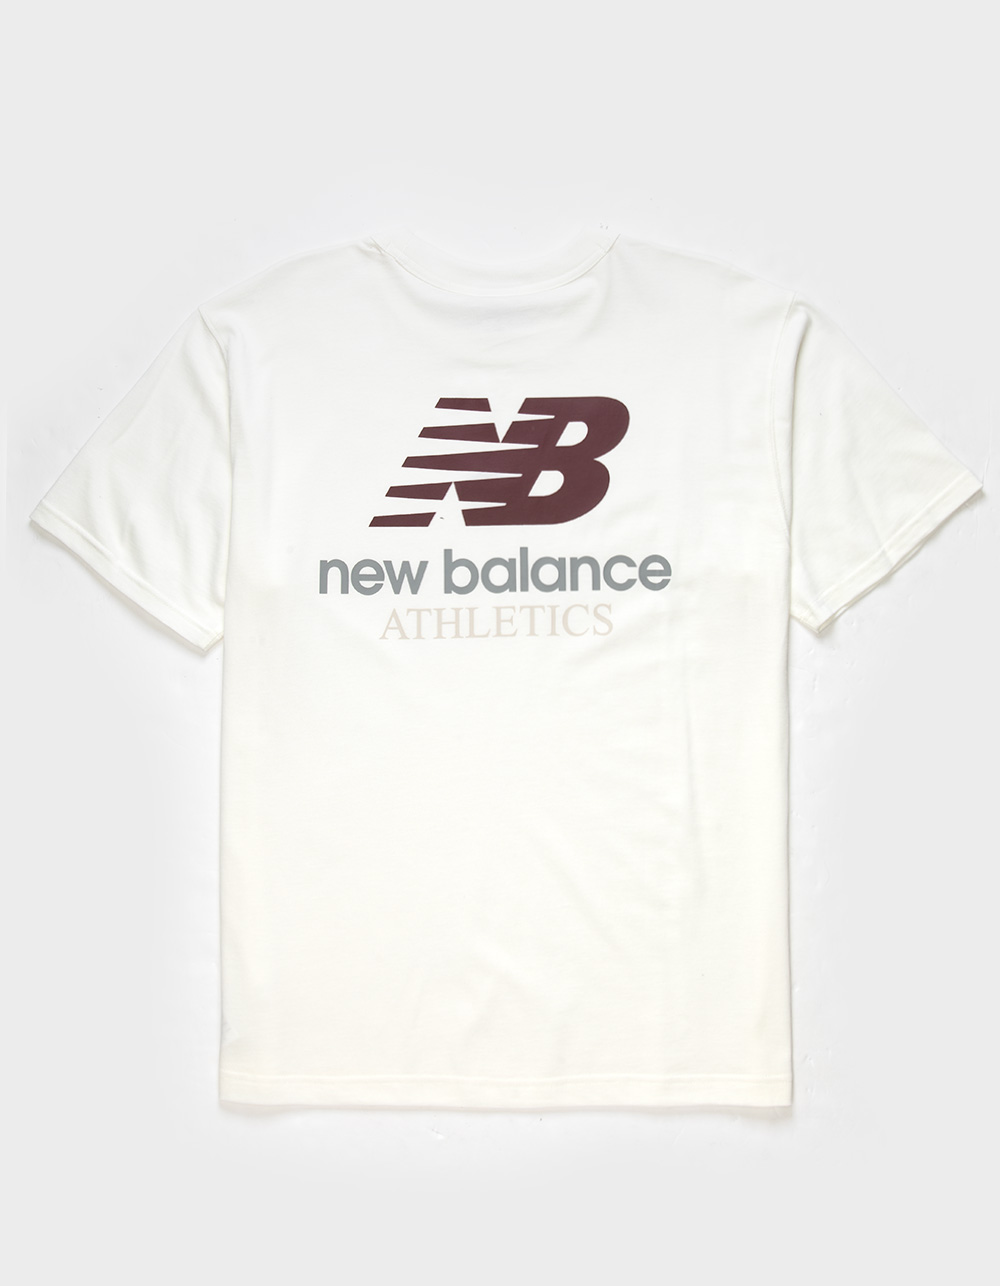 NEW BALANCE Athletics Logo Mens Tee - WHITE | Tillys